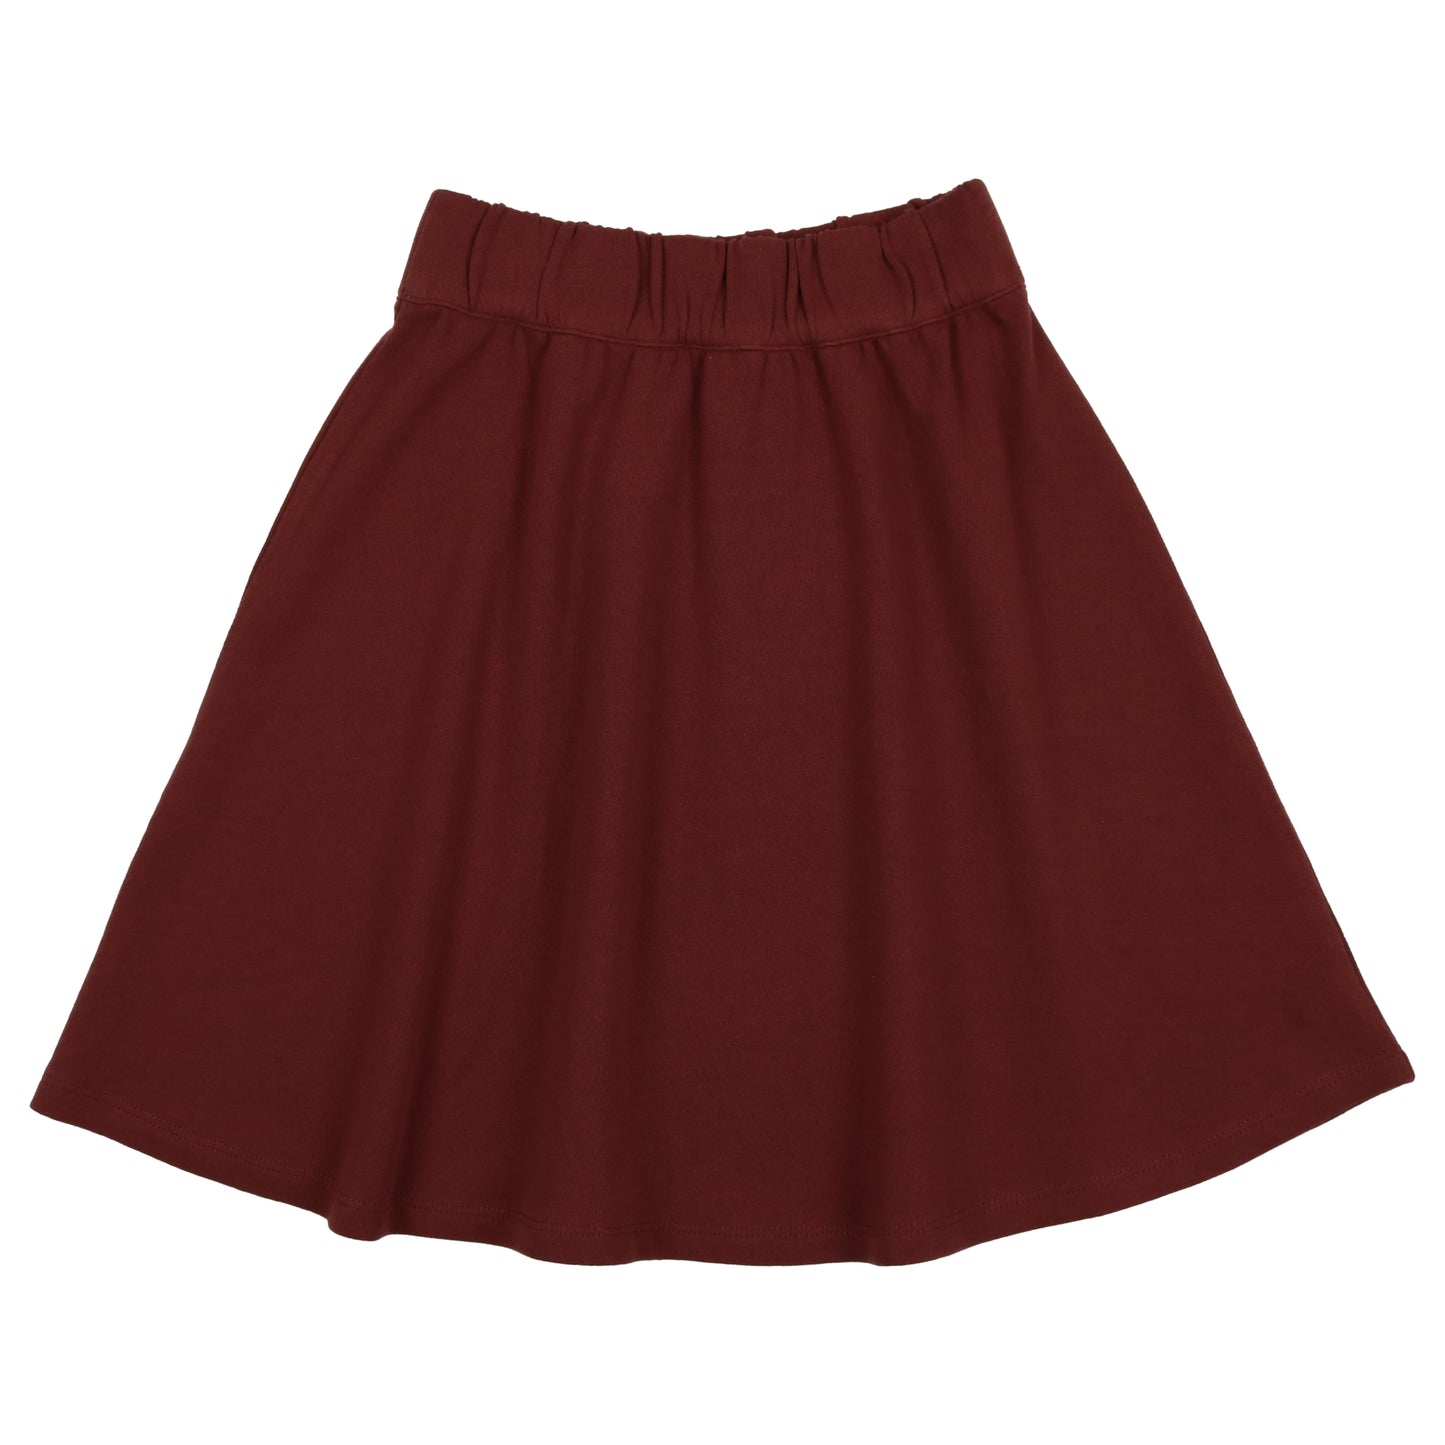 Kin And Kin Scarlet Pine Skirt [Final Sale]